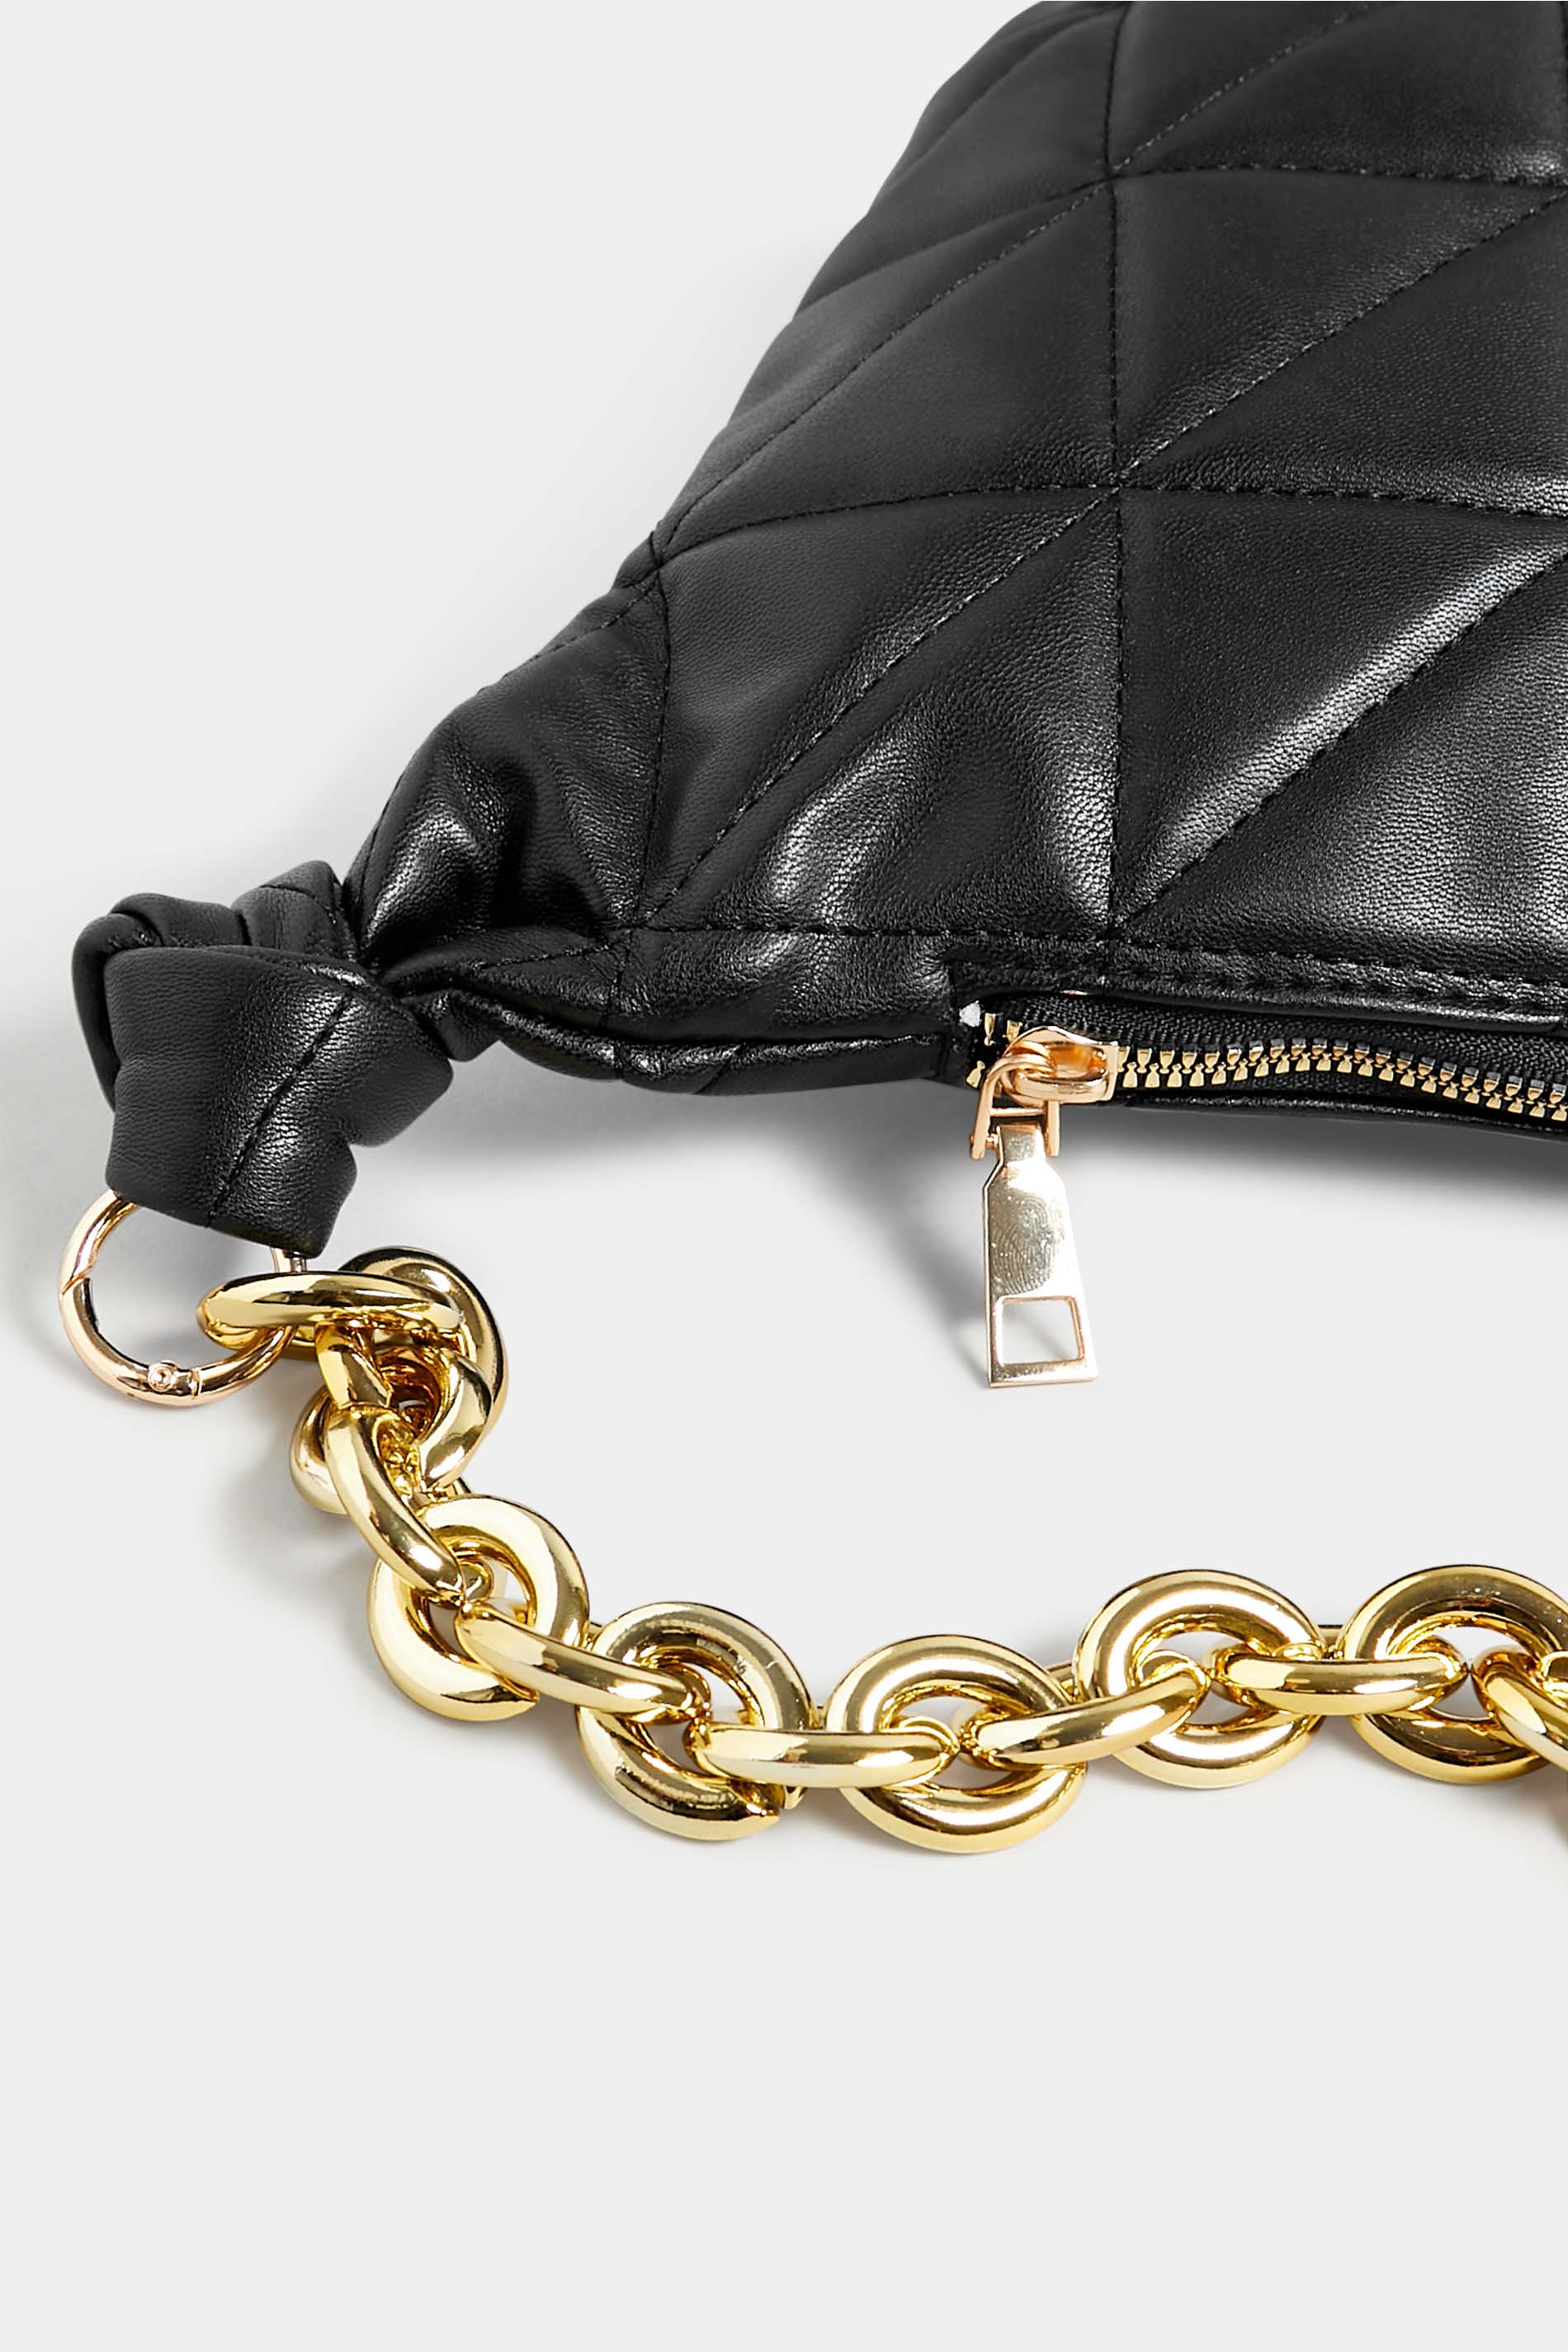 Stradivarius Leather Effect Chain Tote Bag Black M